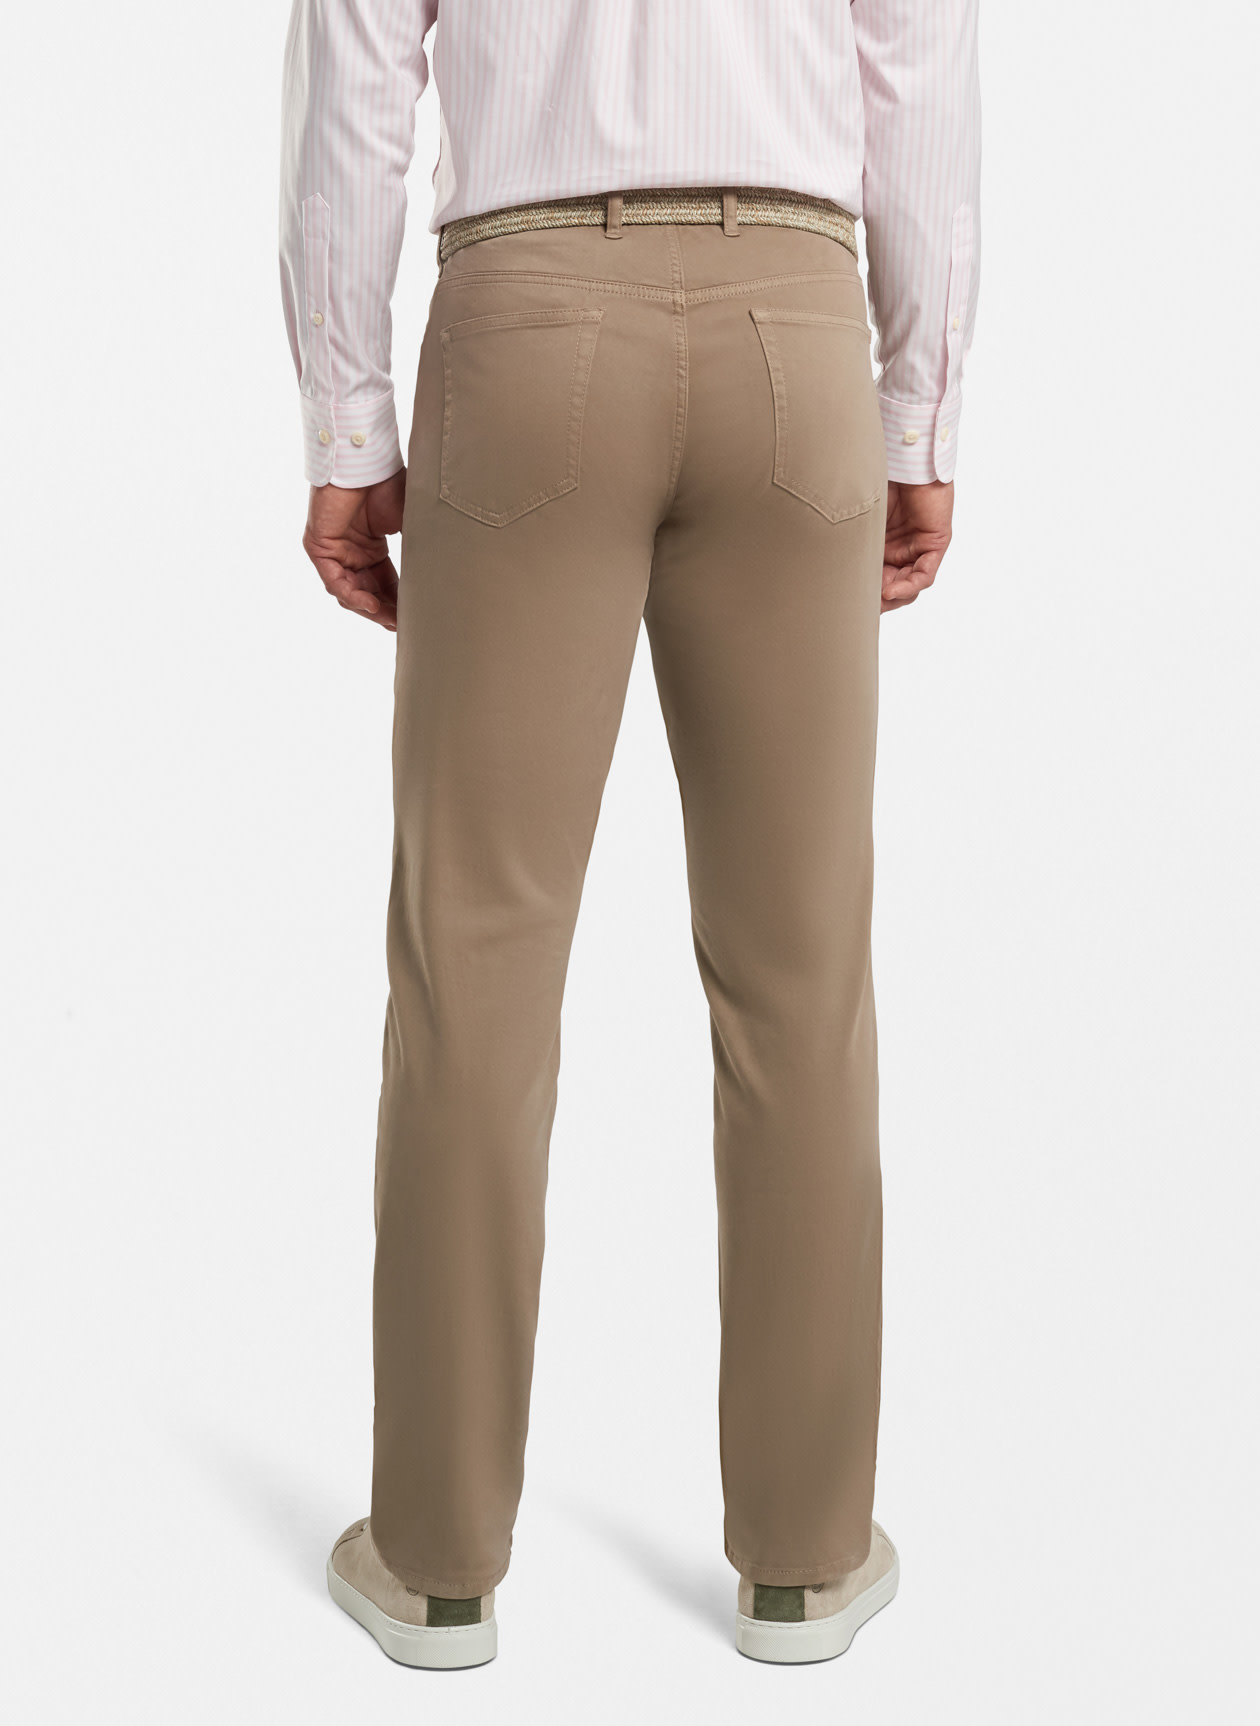 Peter Millar Collection 40 x 34 Brown Men's Chino 5-Pocket Men's Pants MSRP  198$